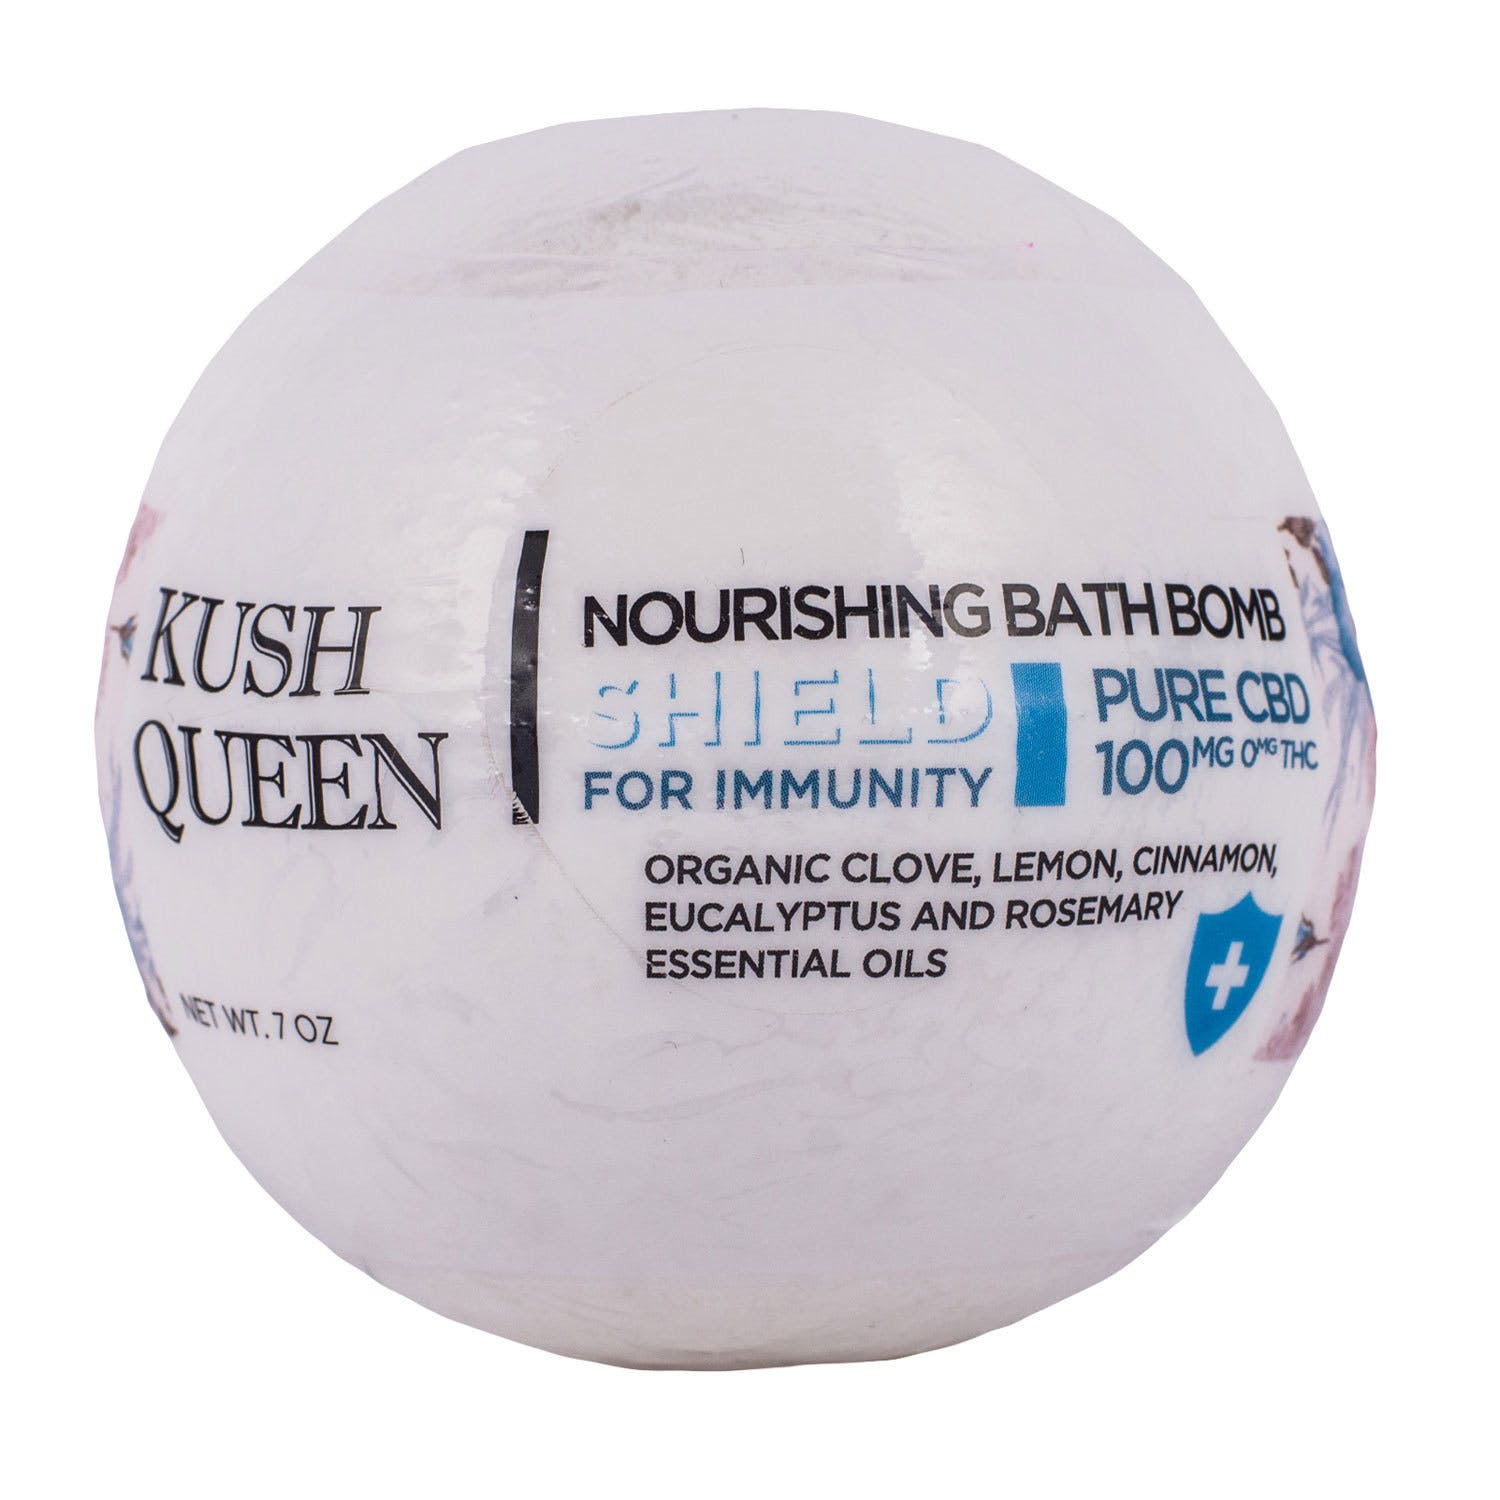 Kush Queen - Shield for Immunity CBD Bath Bomb